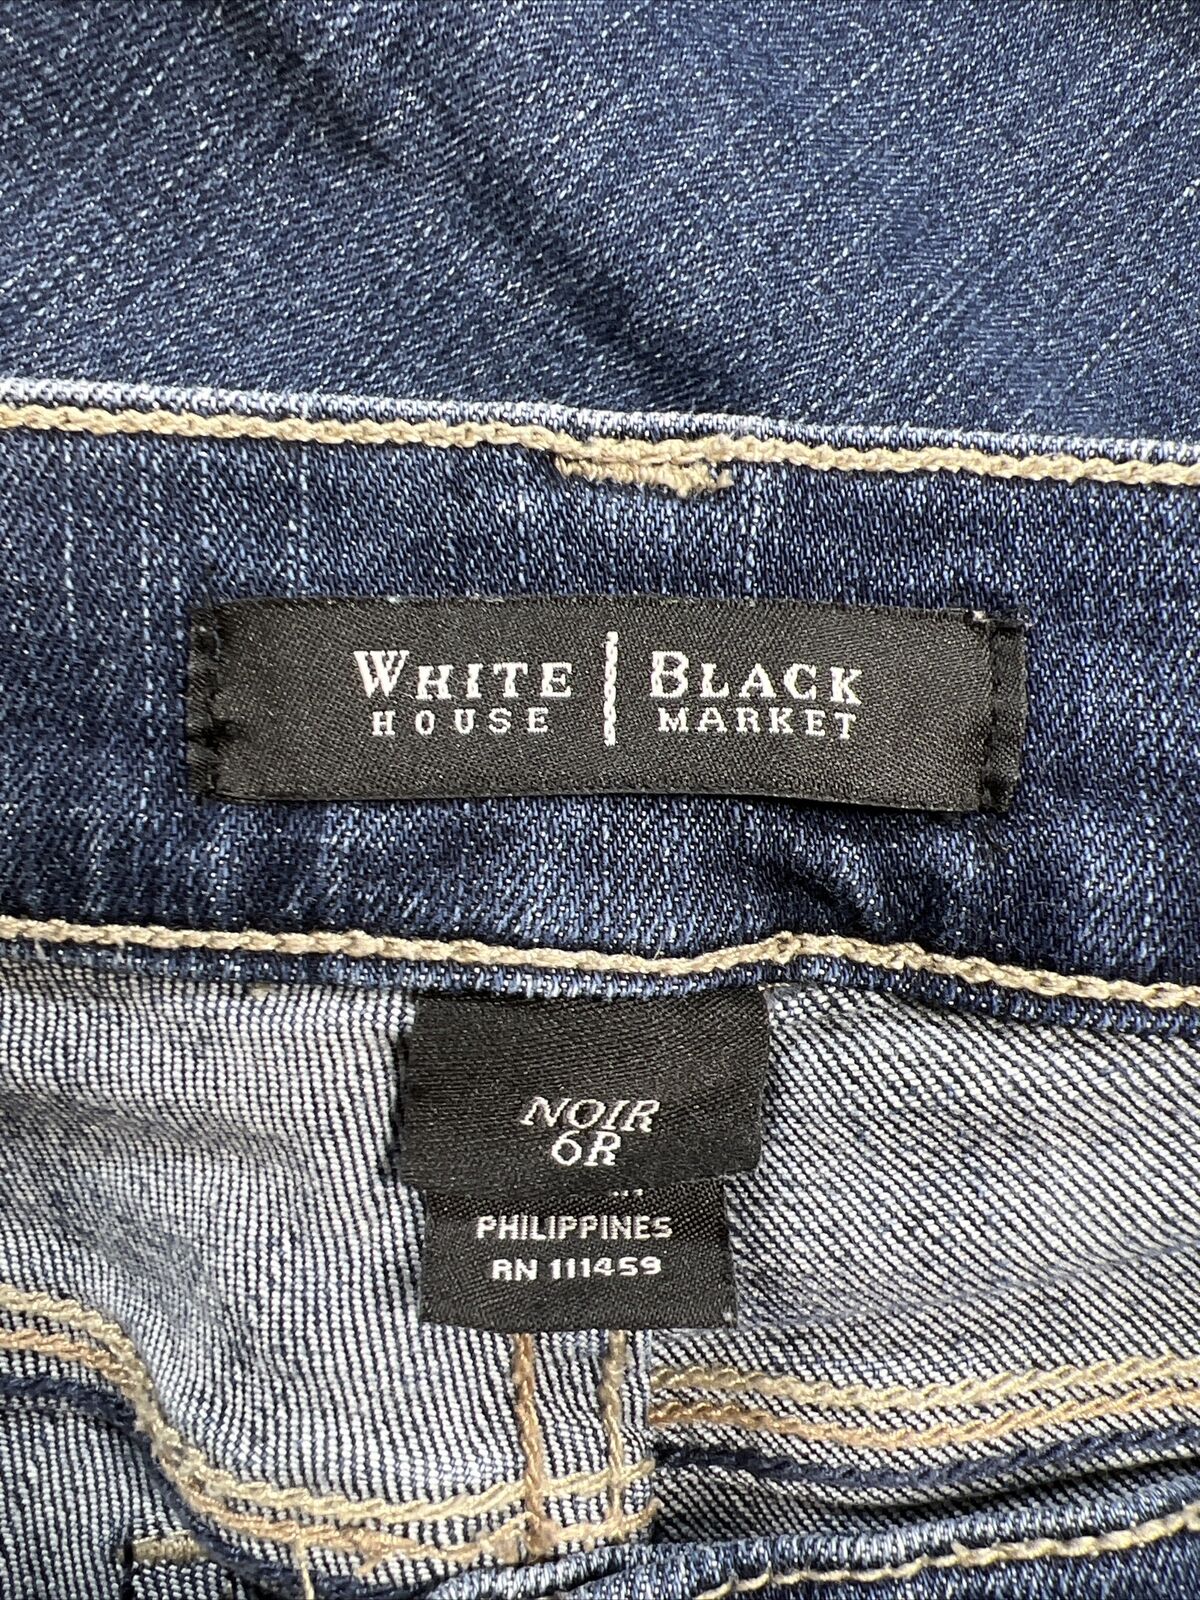 White House Black Market - Vaqueros con corte de bota para mujer, color negro, lavado oscuro, 6